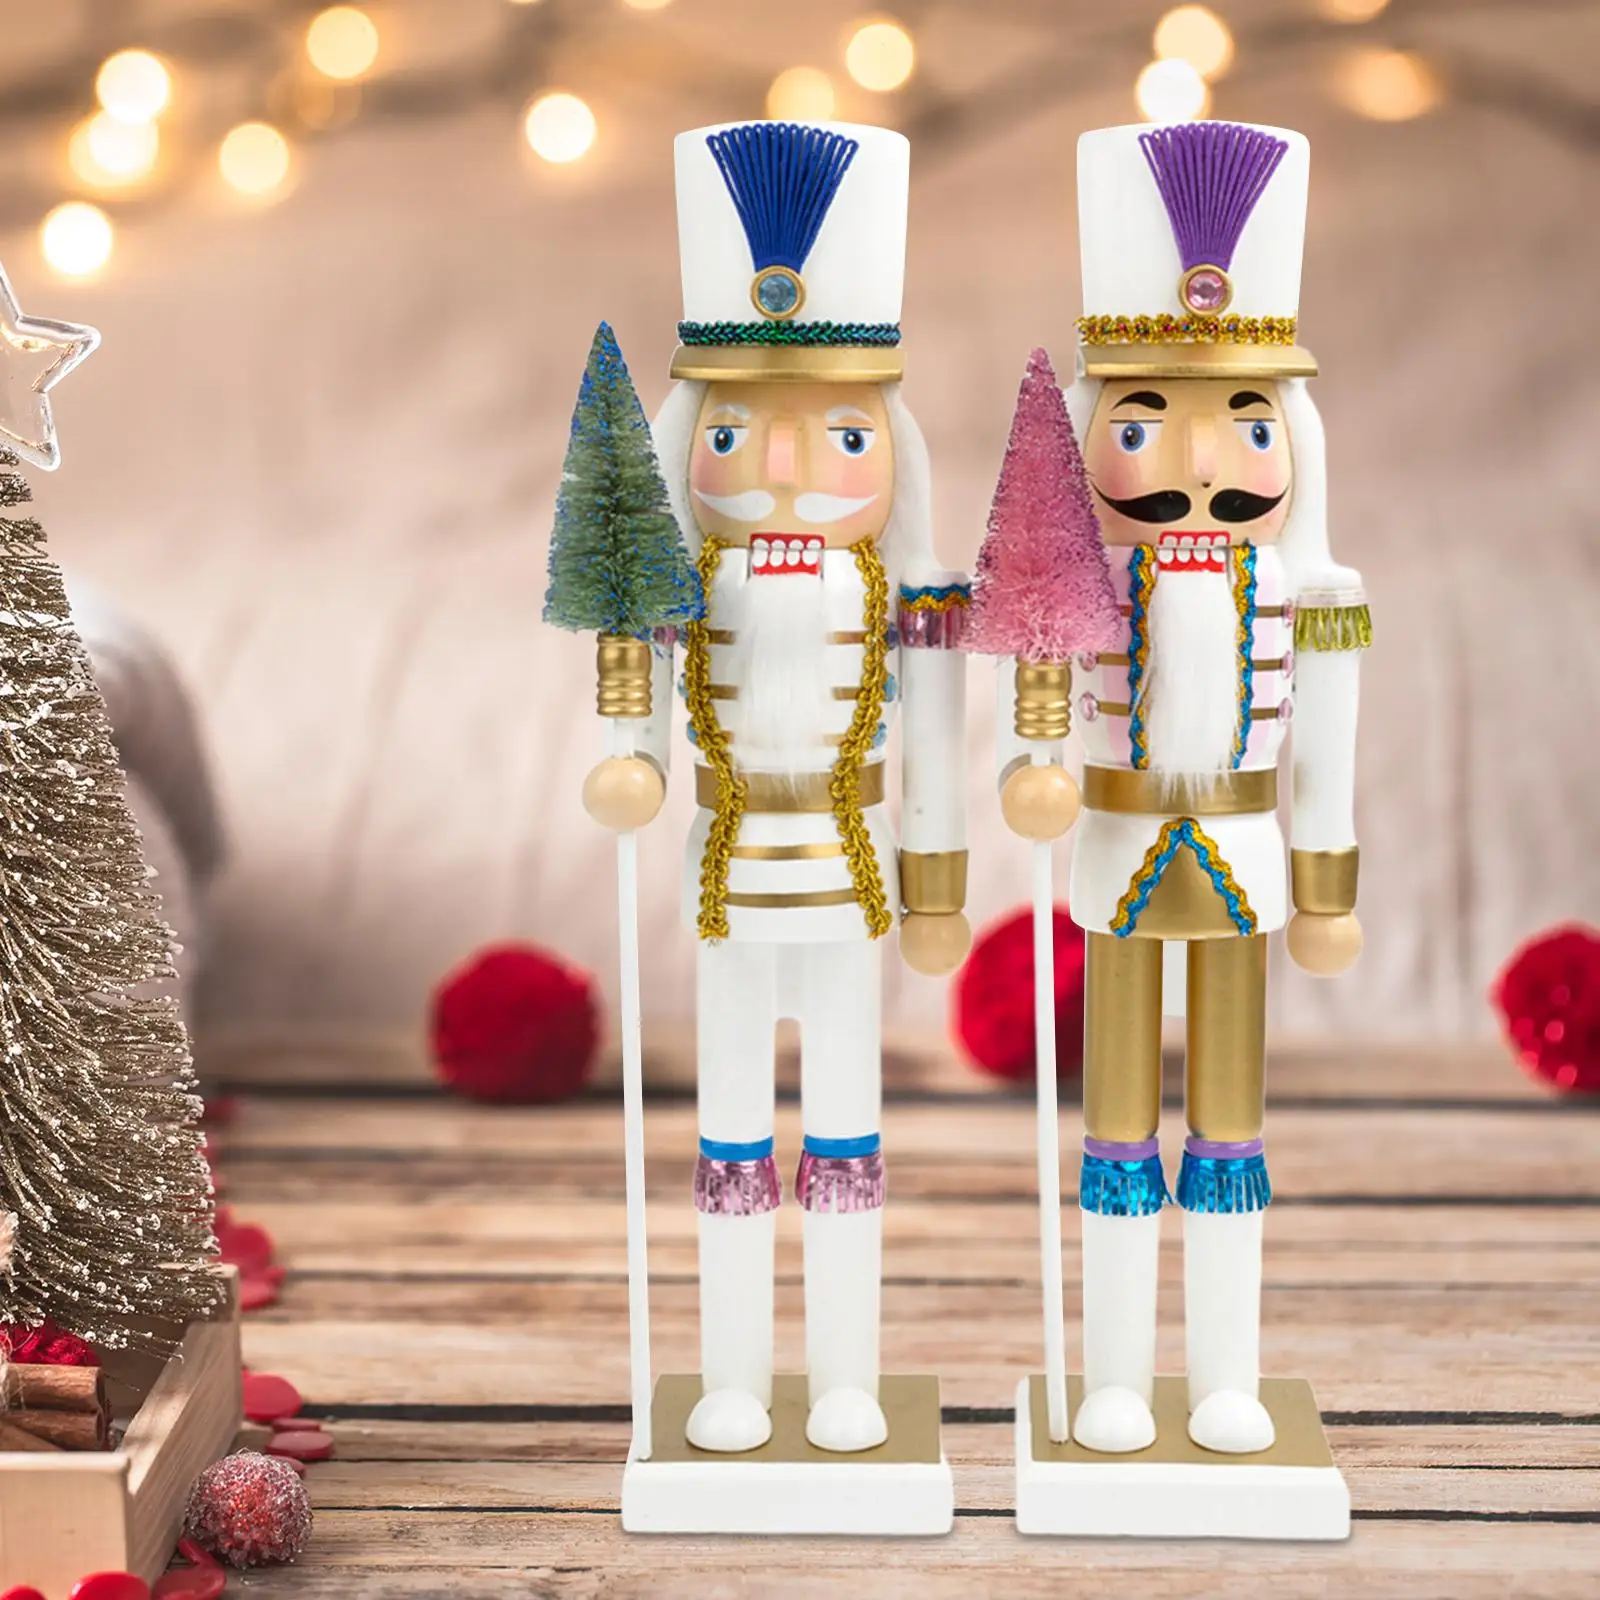 2x Christmas Nutcracker Ornament Nutcracker Figures King Solider Figurine for Tabletop Centerpieces Scene Layout Accessories